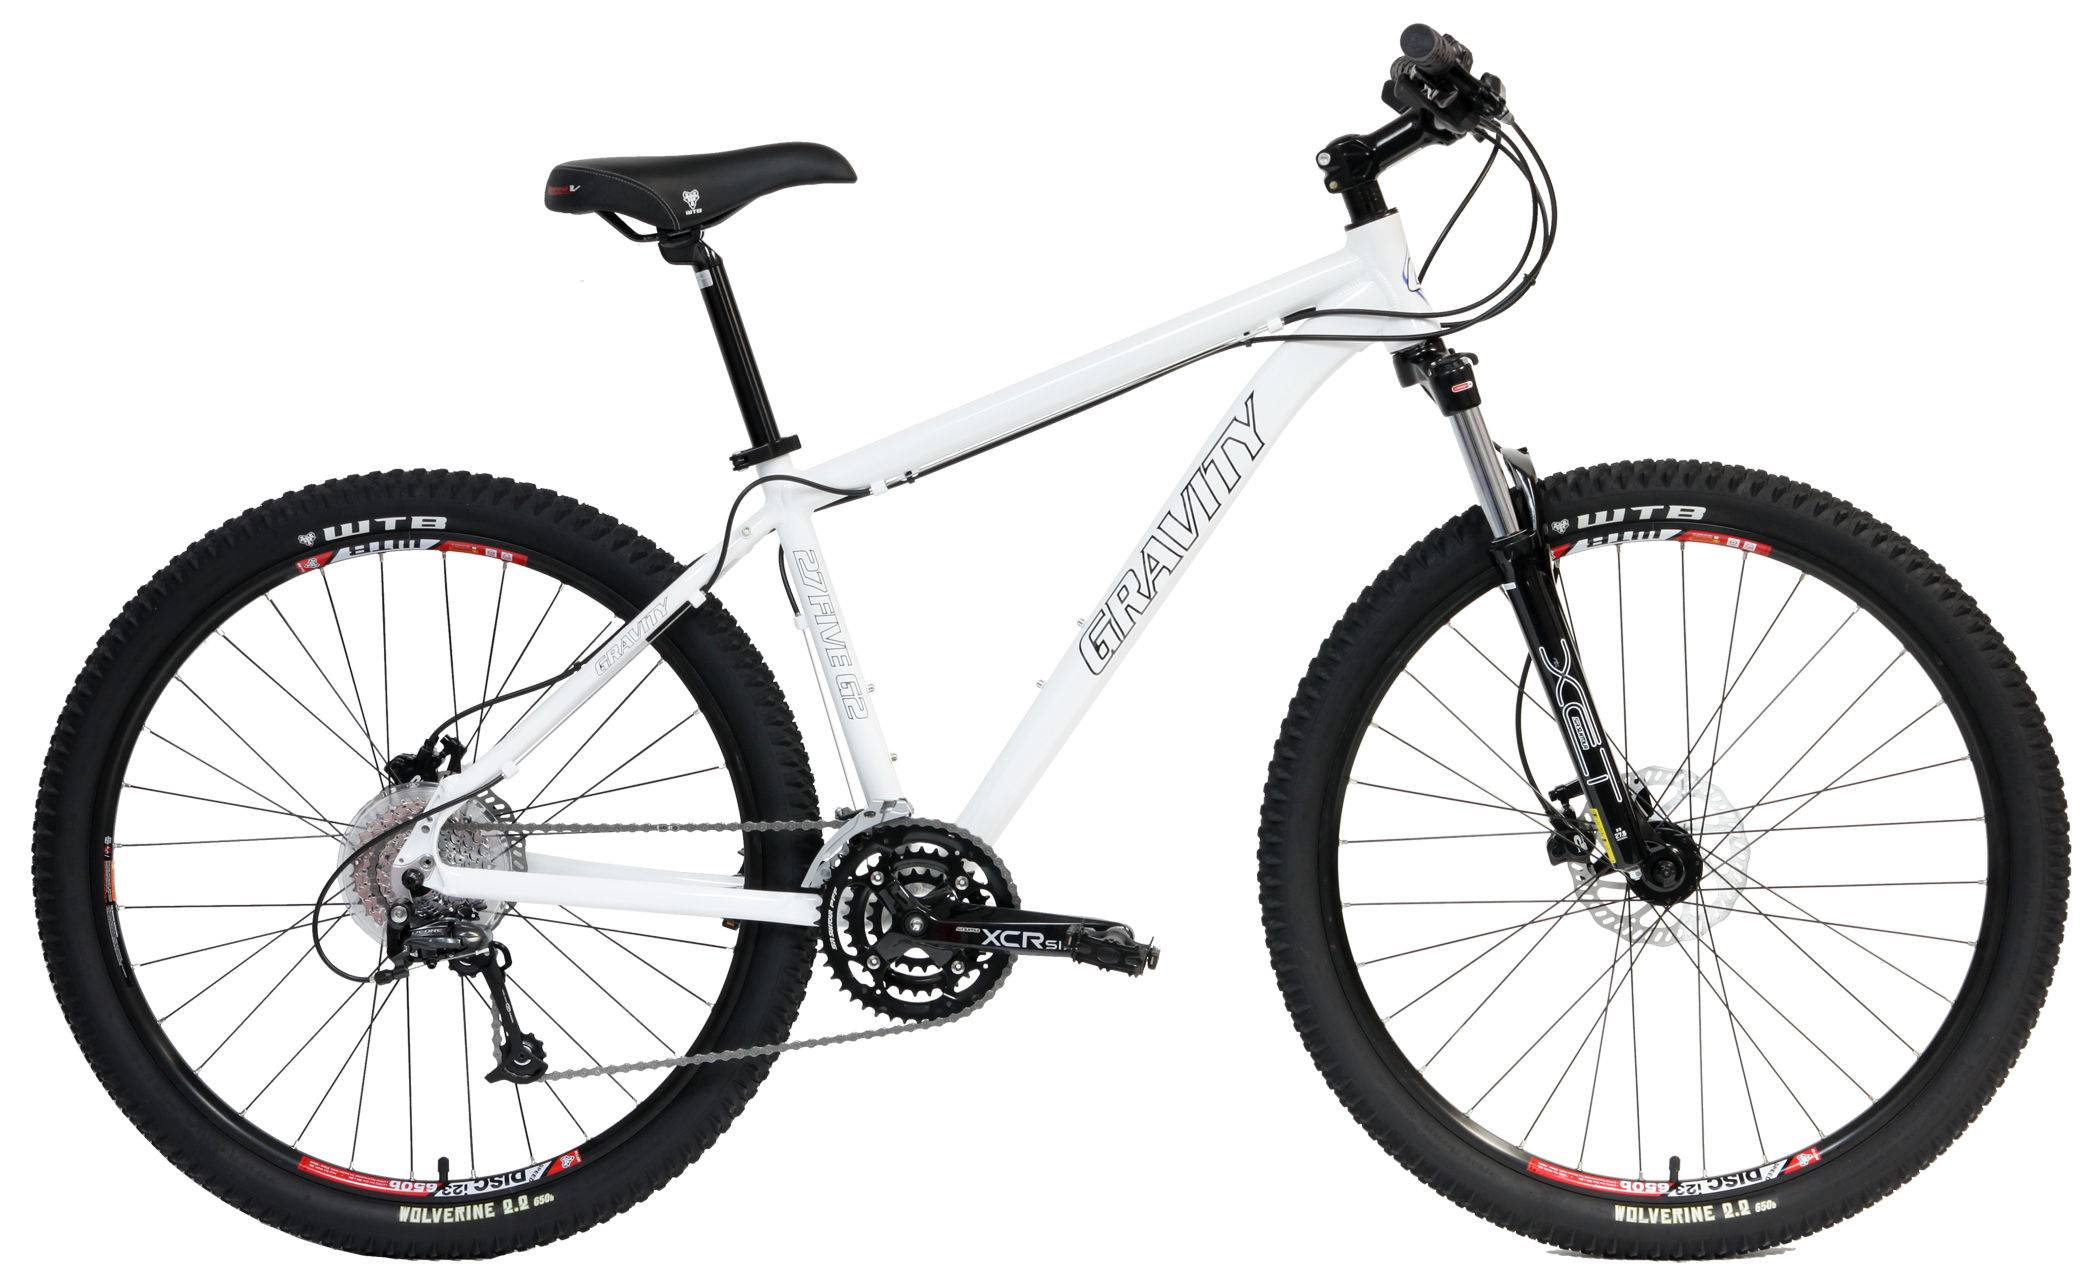 garion 27.5 mountain bike